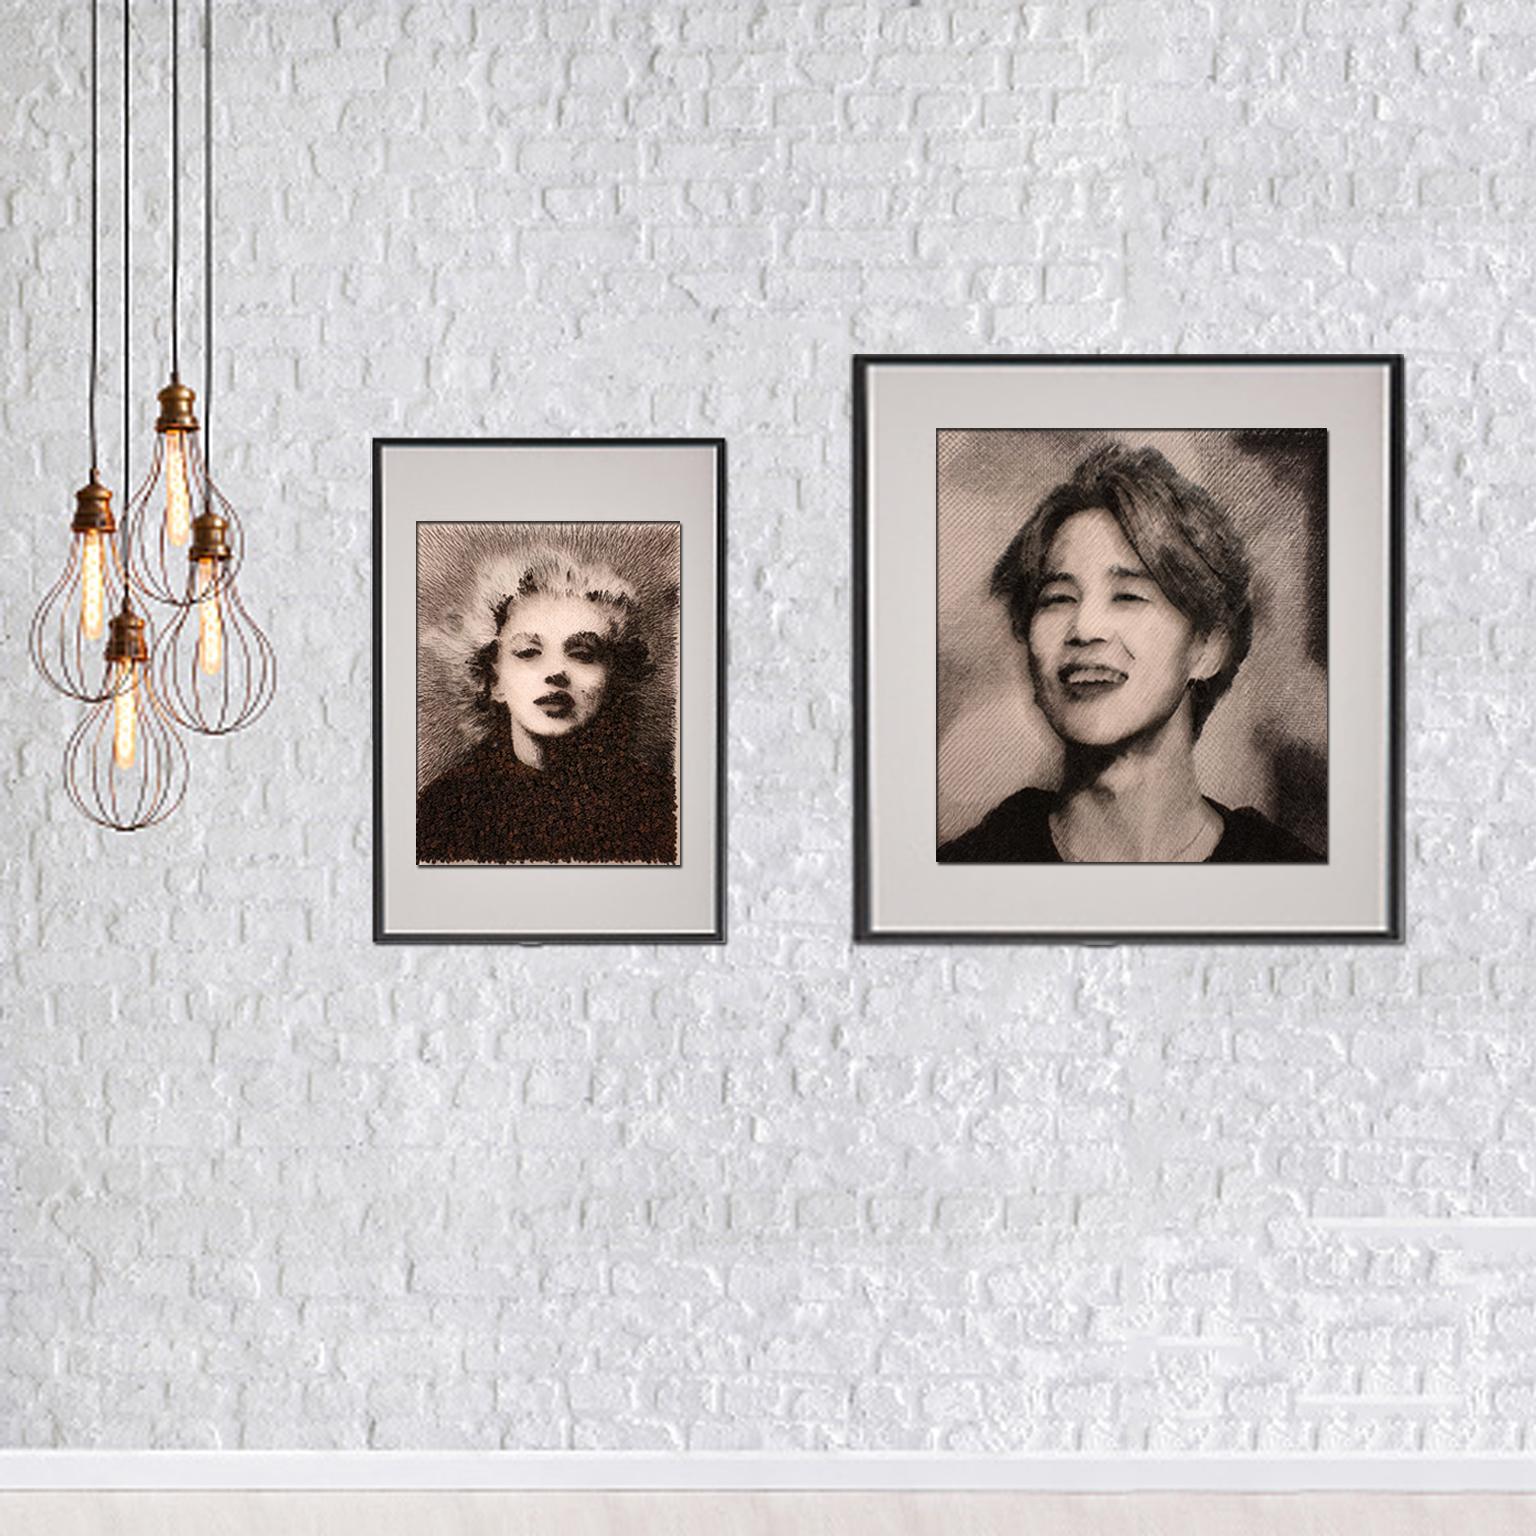 Marilyn Monroe[Black, White, Steel on canvas, Stereoscopic, Portrait, New media] - New Media Mixed Media Art by Kim Yong Jin